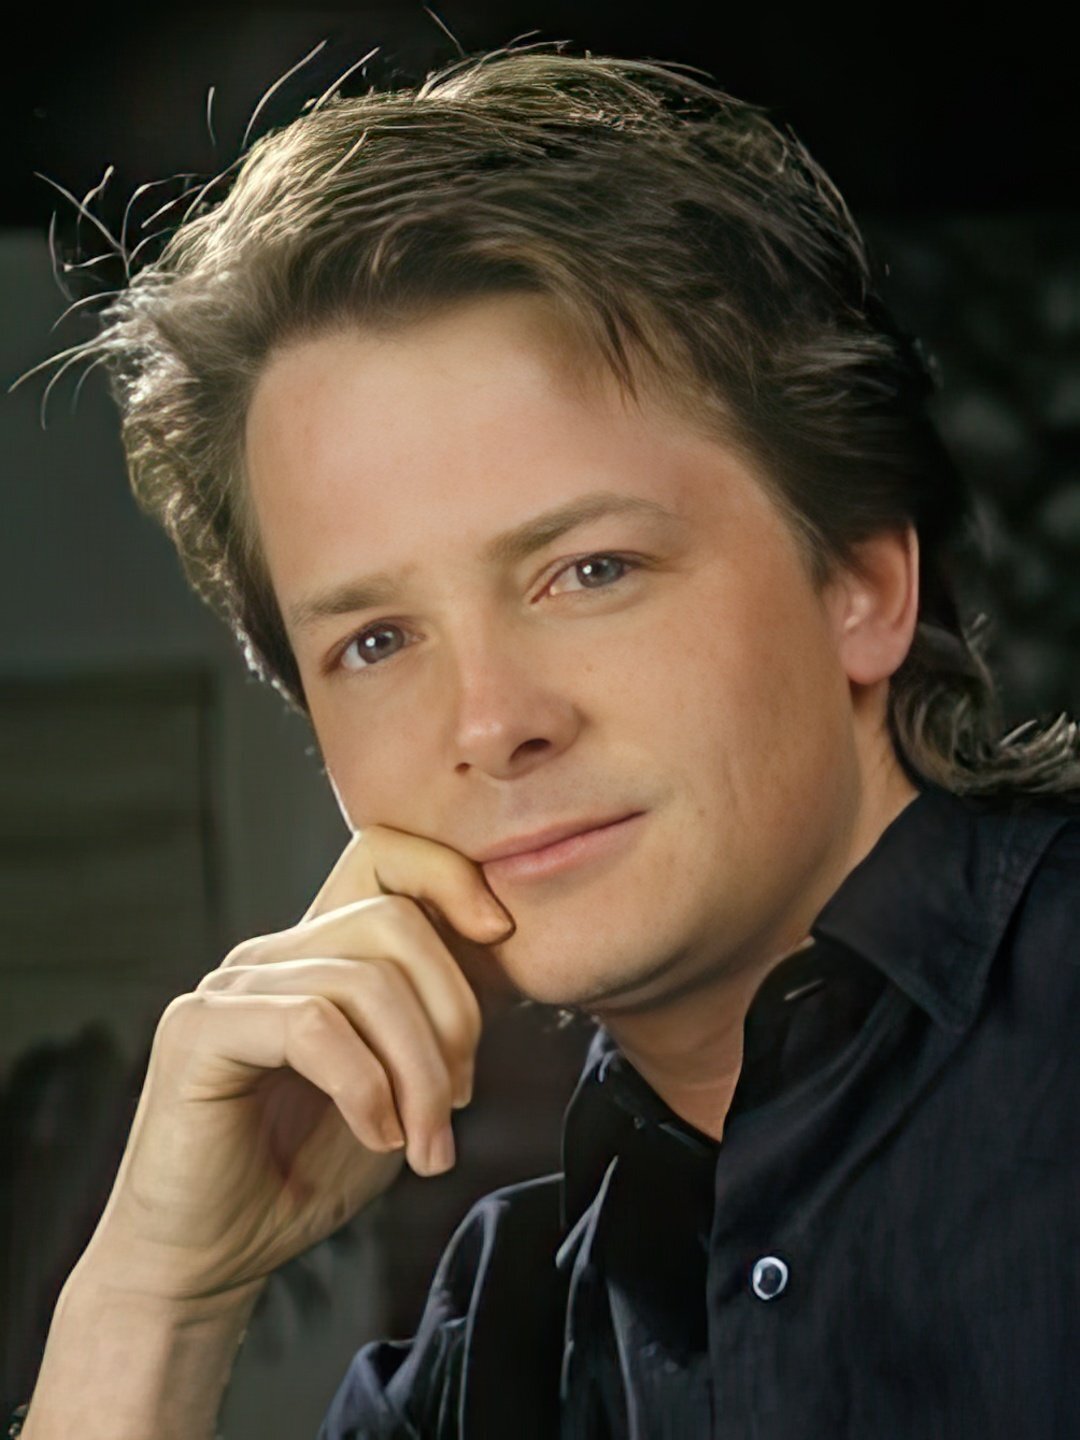 Michael J. Fox young photos